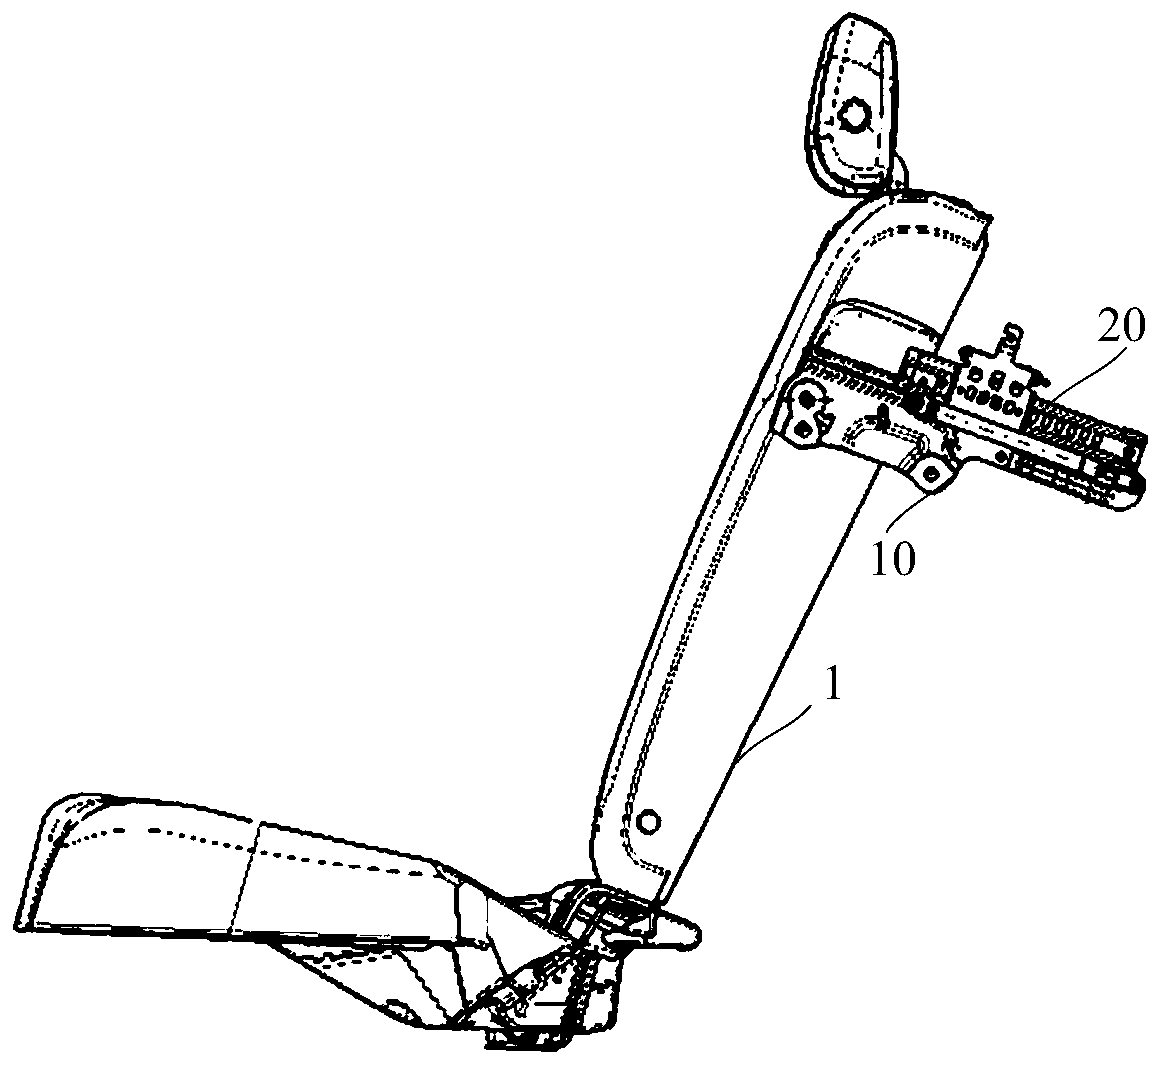 Seat bracket adjusting mechanism